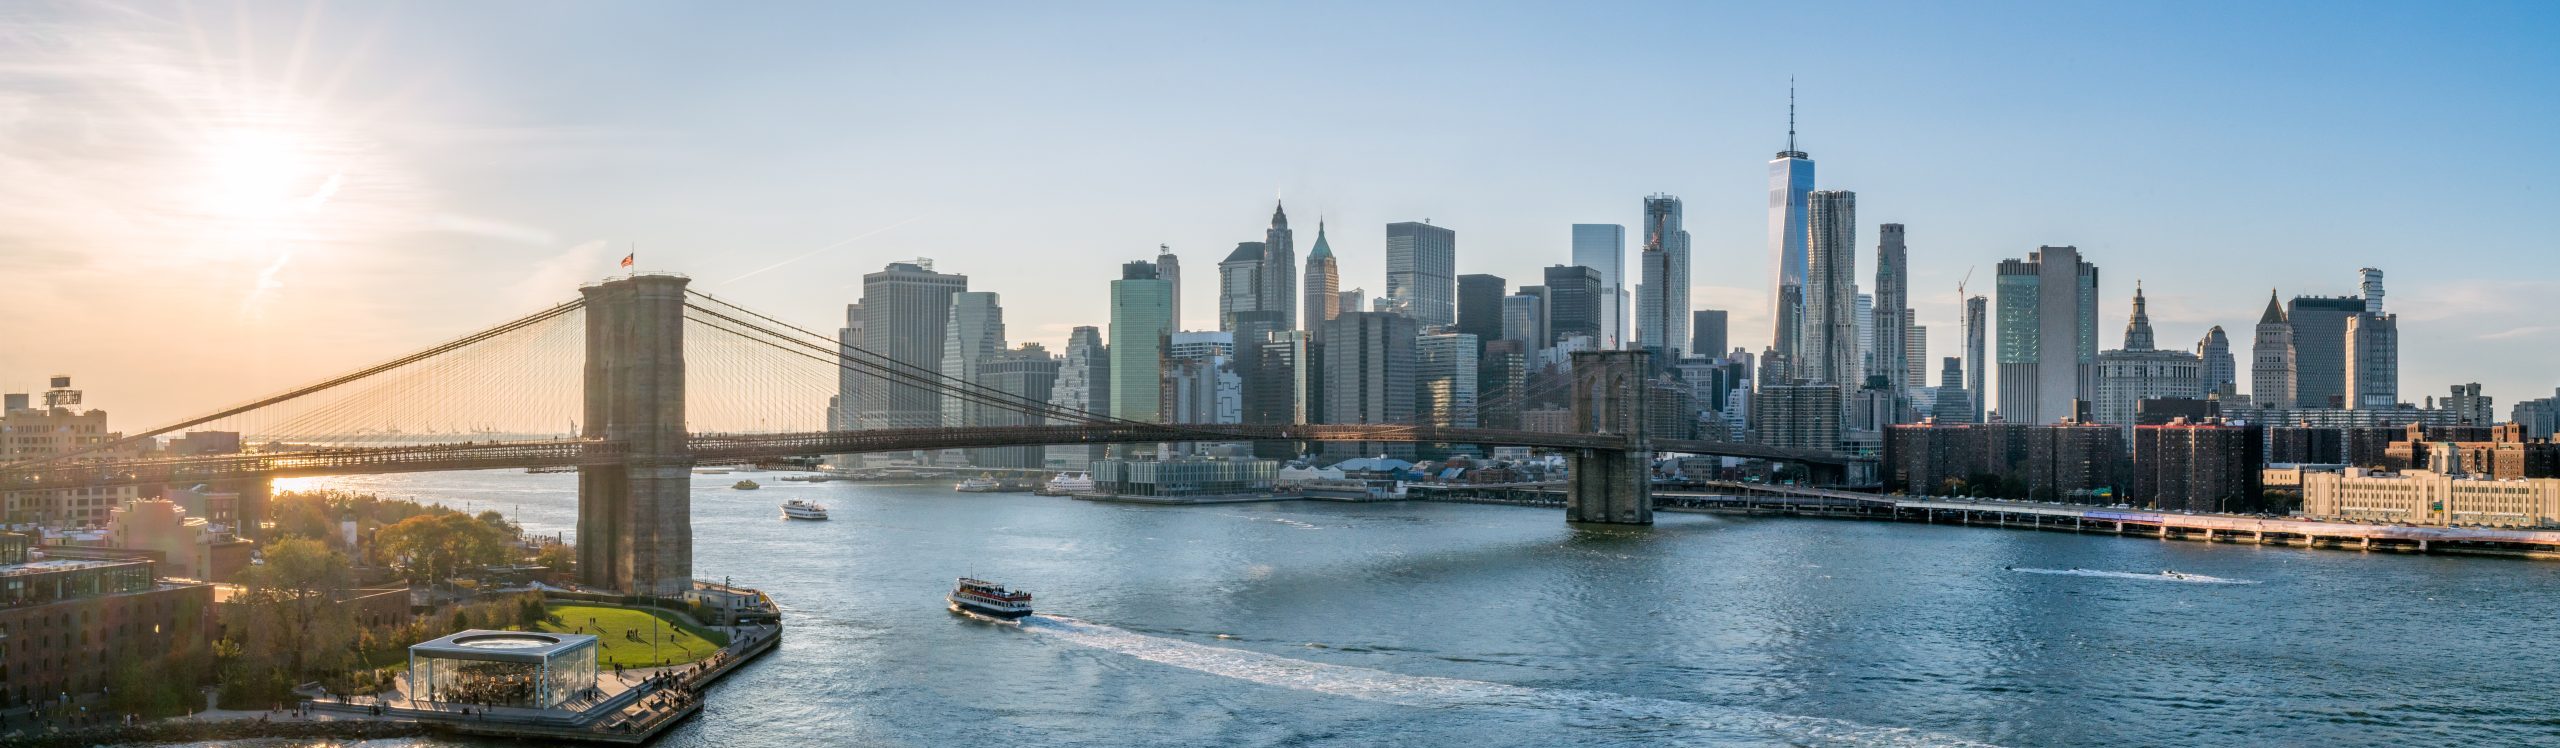 New York City skyline panorama at sunset with Brooklyn Bridge.